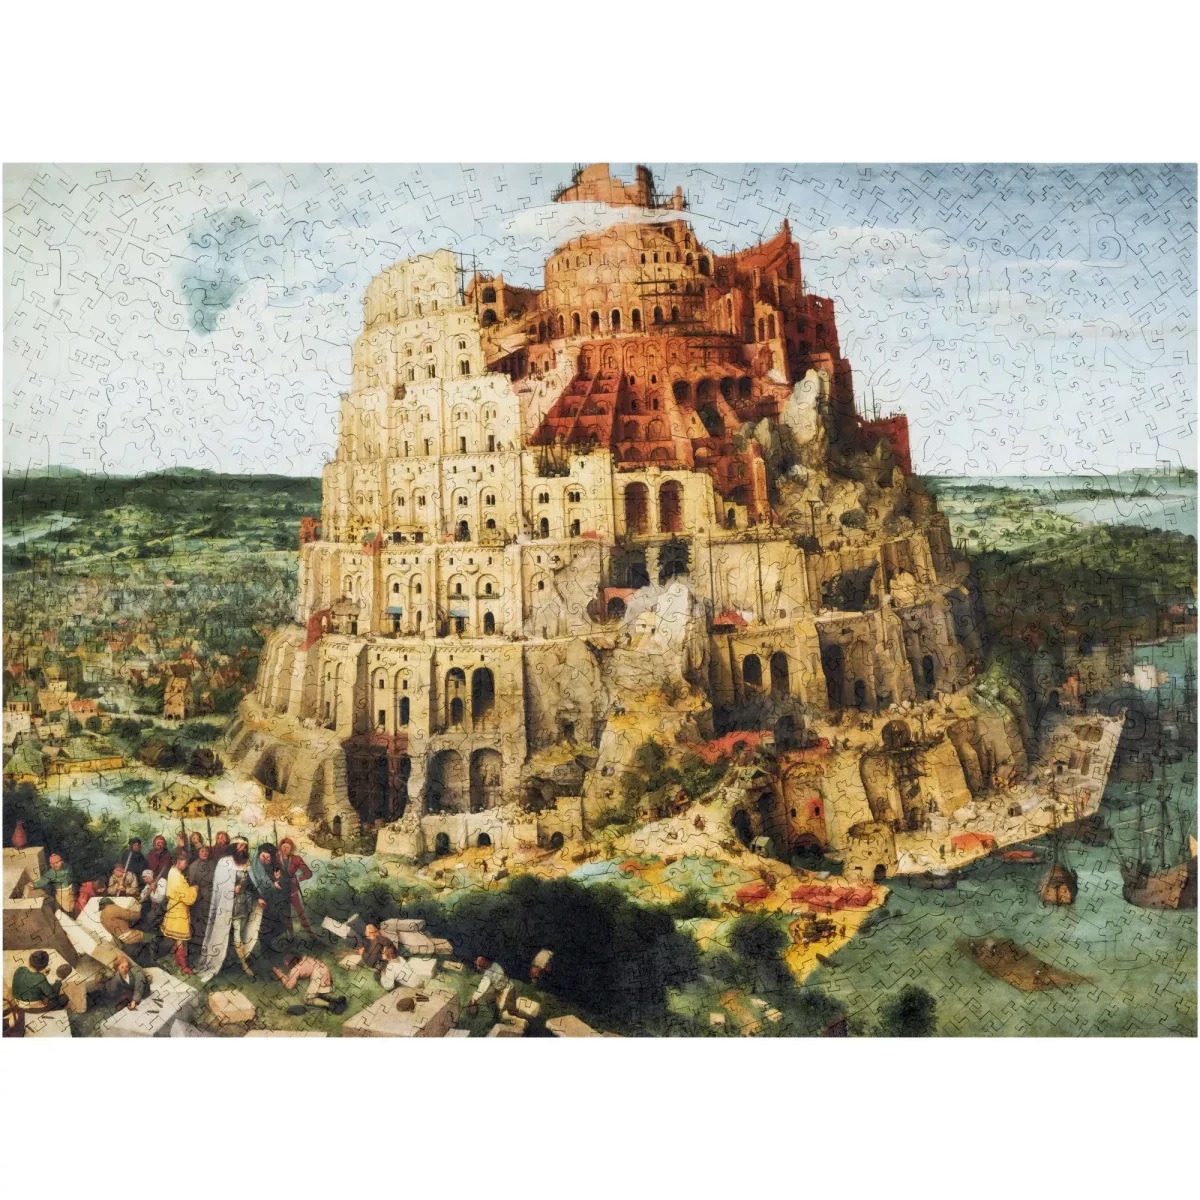 UNIDRAGON - The Tower of Babel - Pieter Bruegel (43 x 59 cm) Holzpuzzle - 1000 Teile